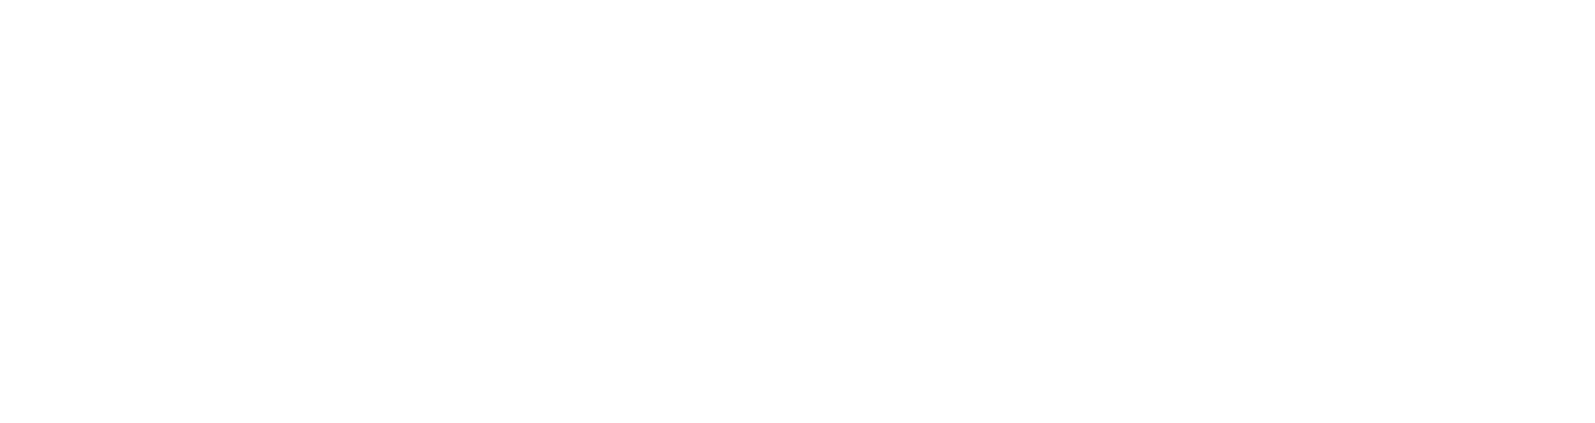 Intact Financial logo grand pour les fonds sombres (PNG transparent)